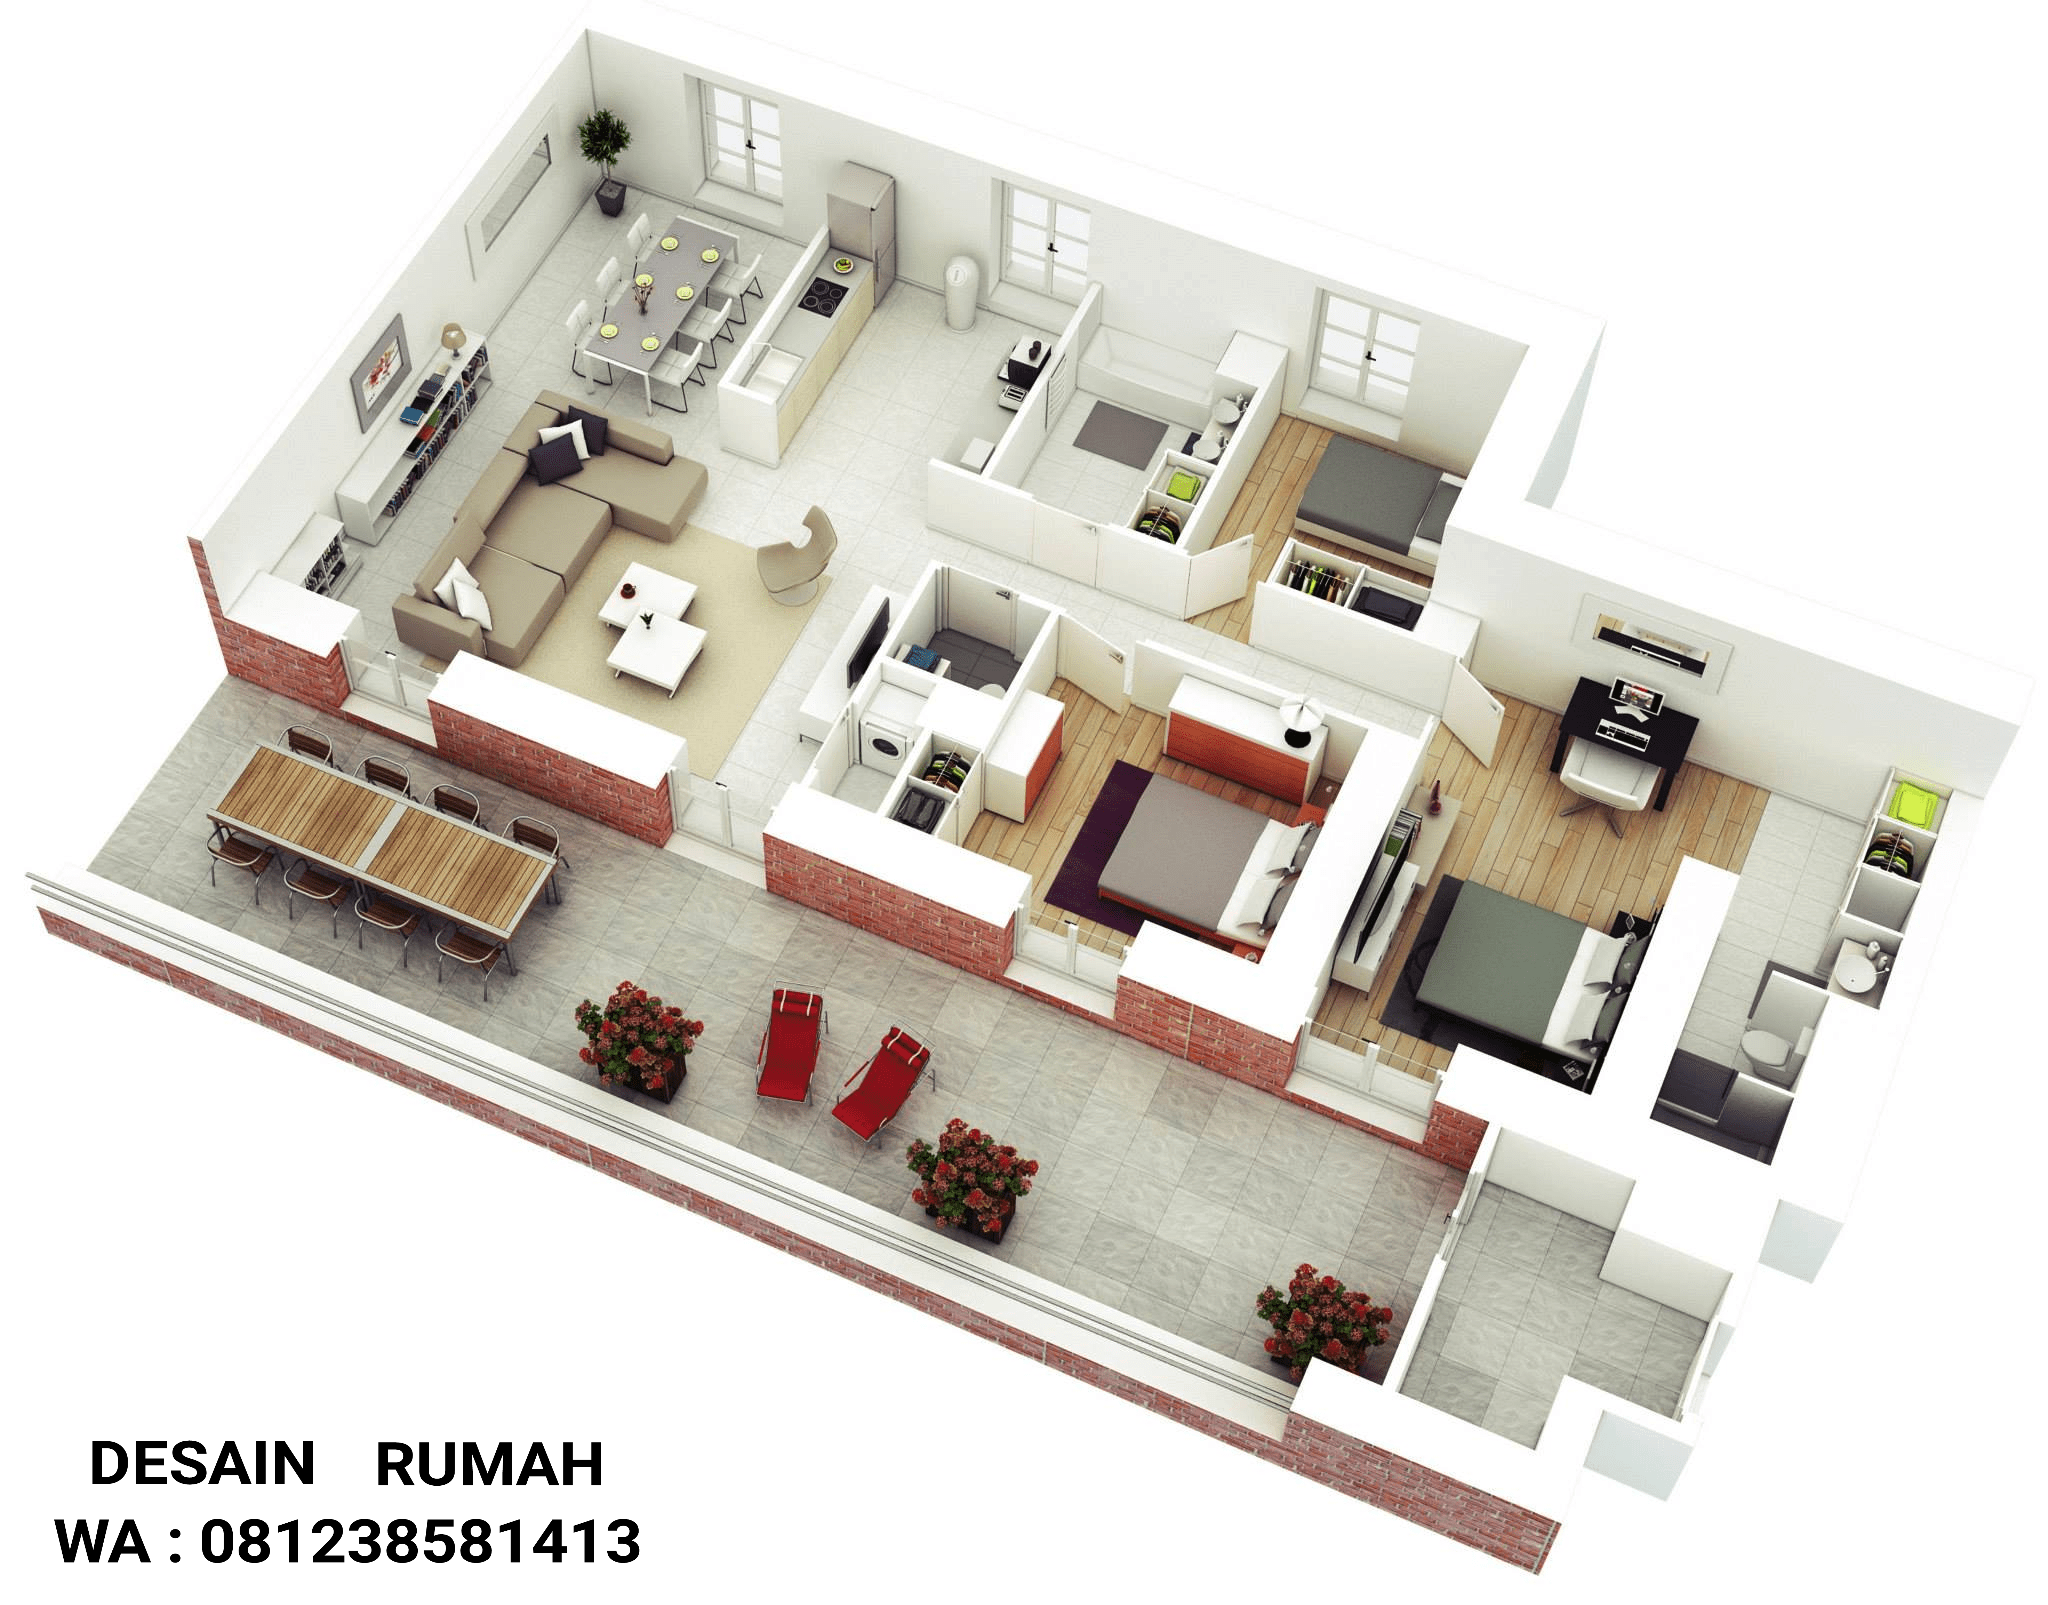 Jasa Desain Rumah Minimalis Sederhana Yogyakarta 081238581413